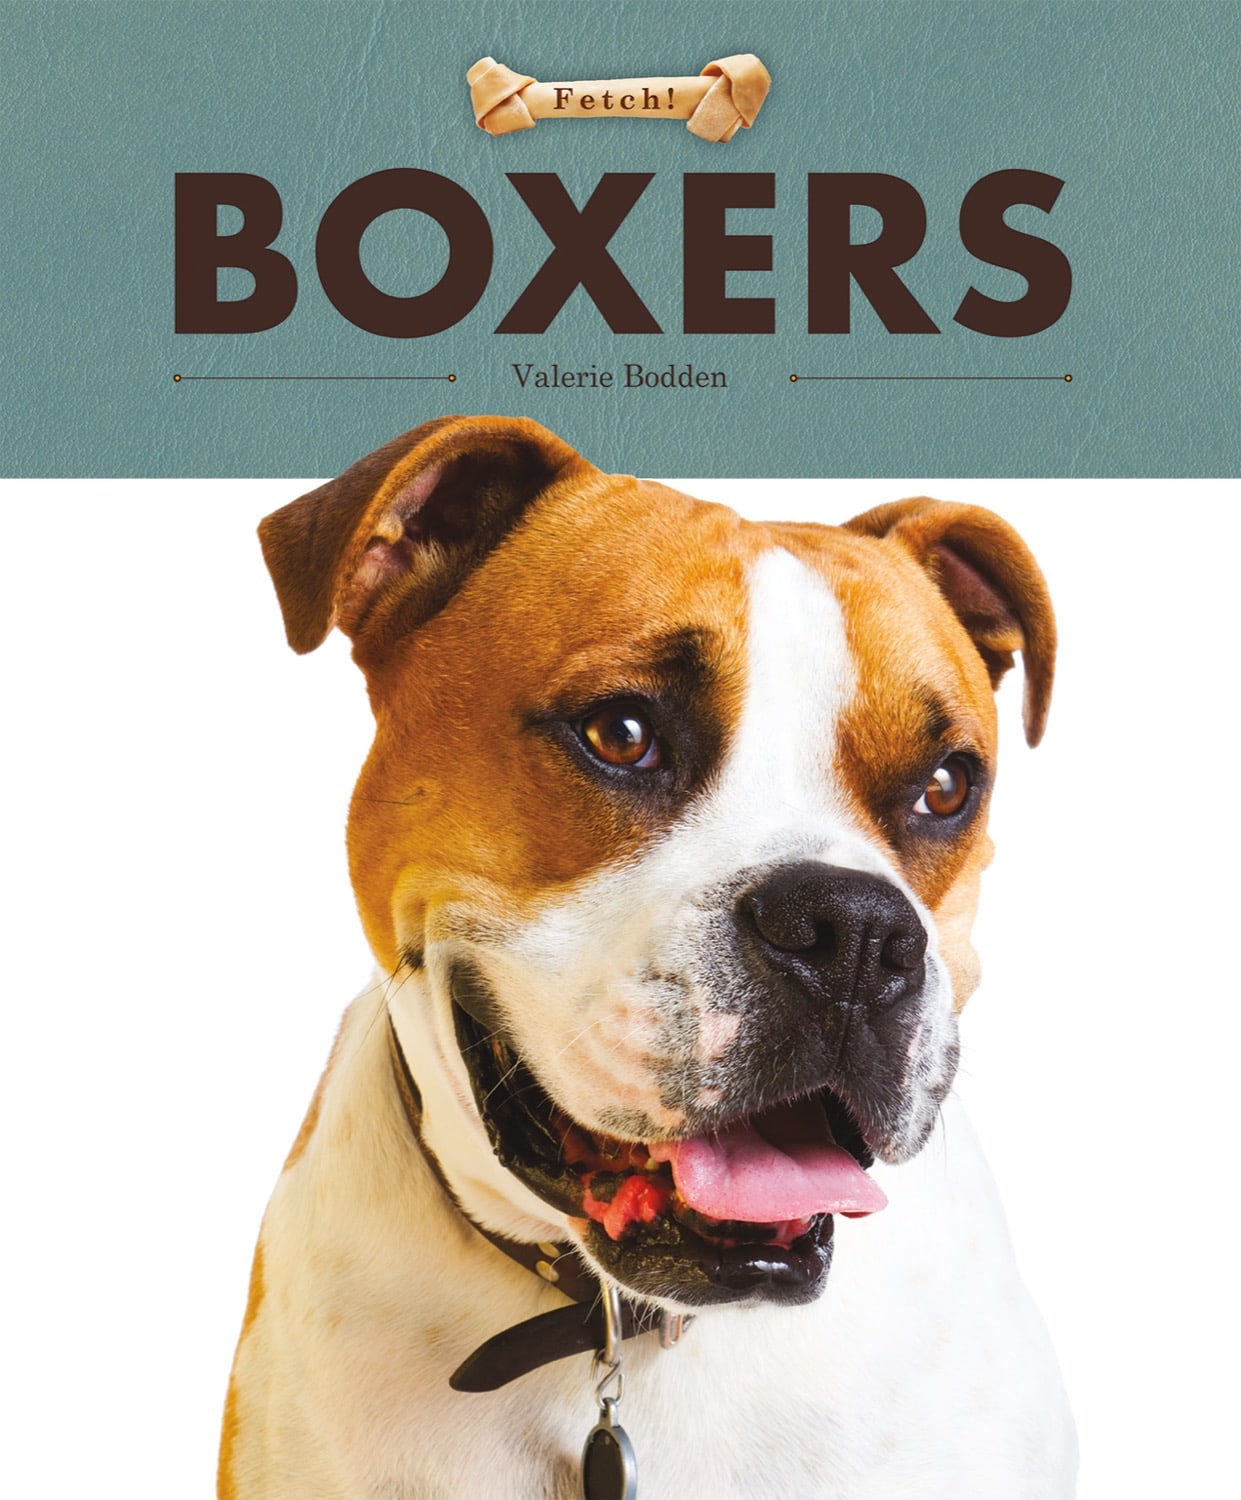 Fetch!: Boxers